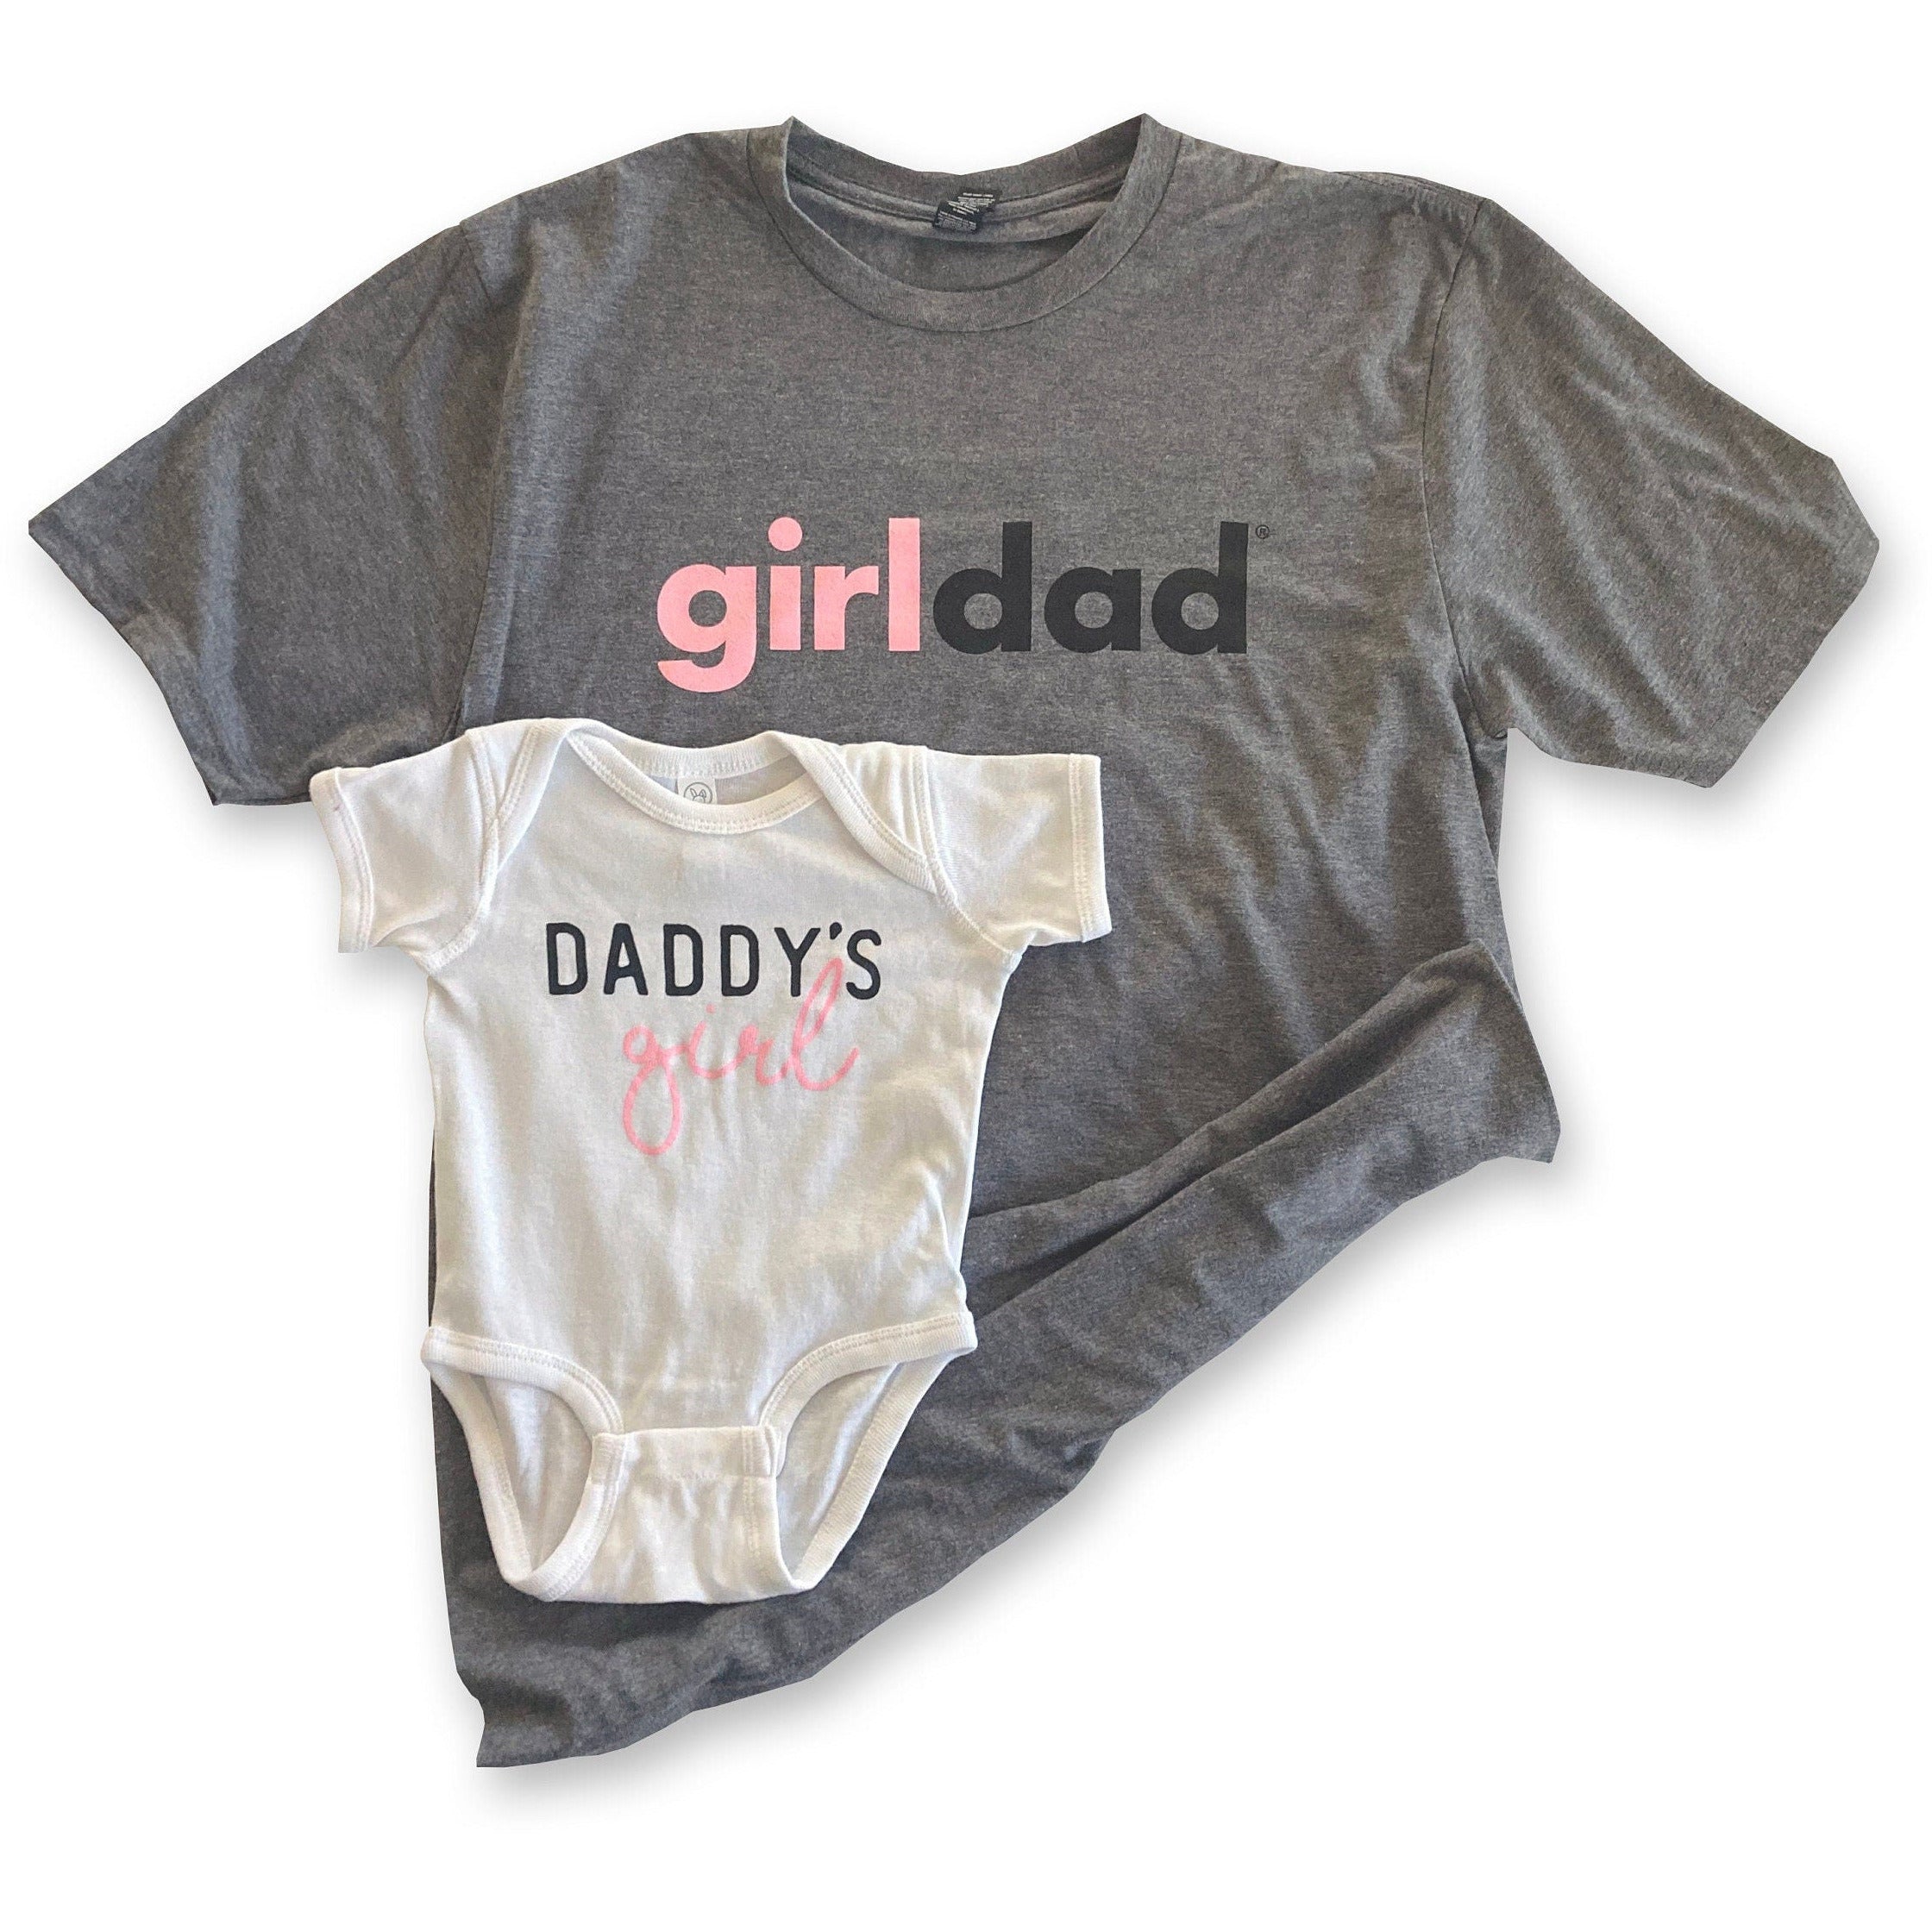 Daddy's Girl Bodysuit White Matching Daddy's Girl & Girldad Shirt